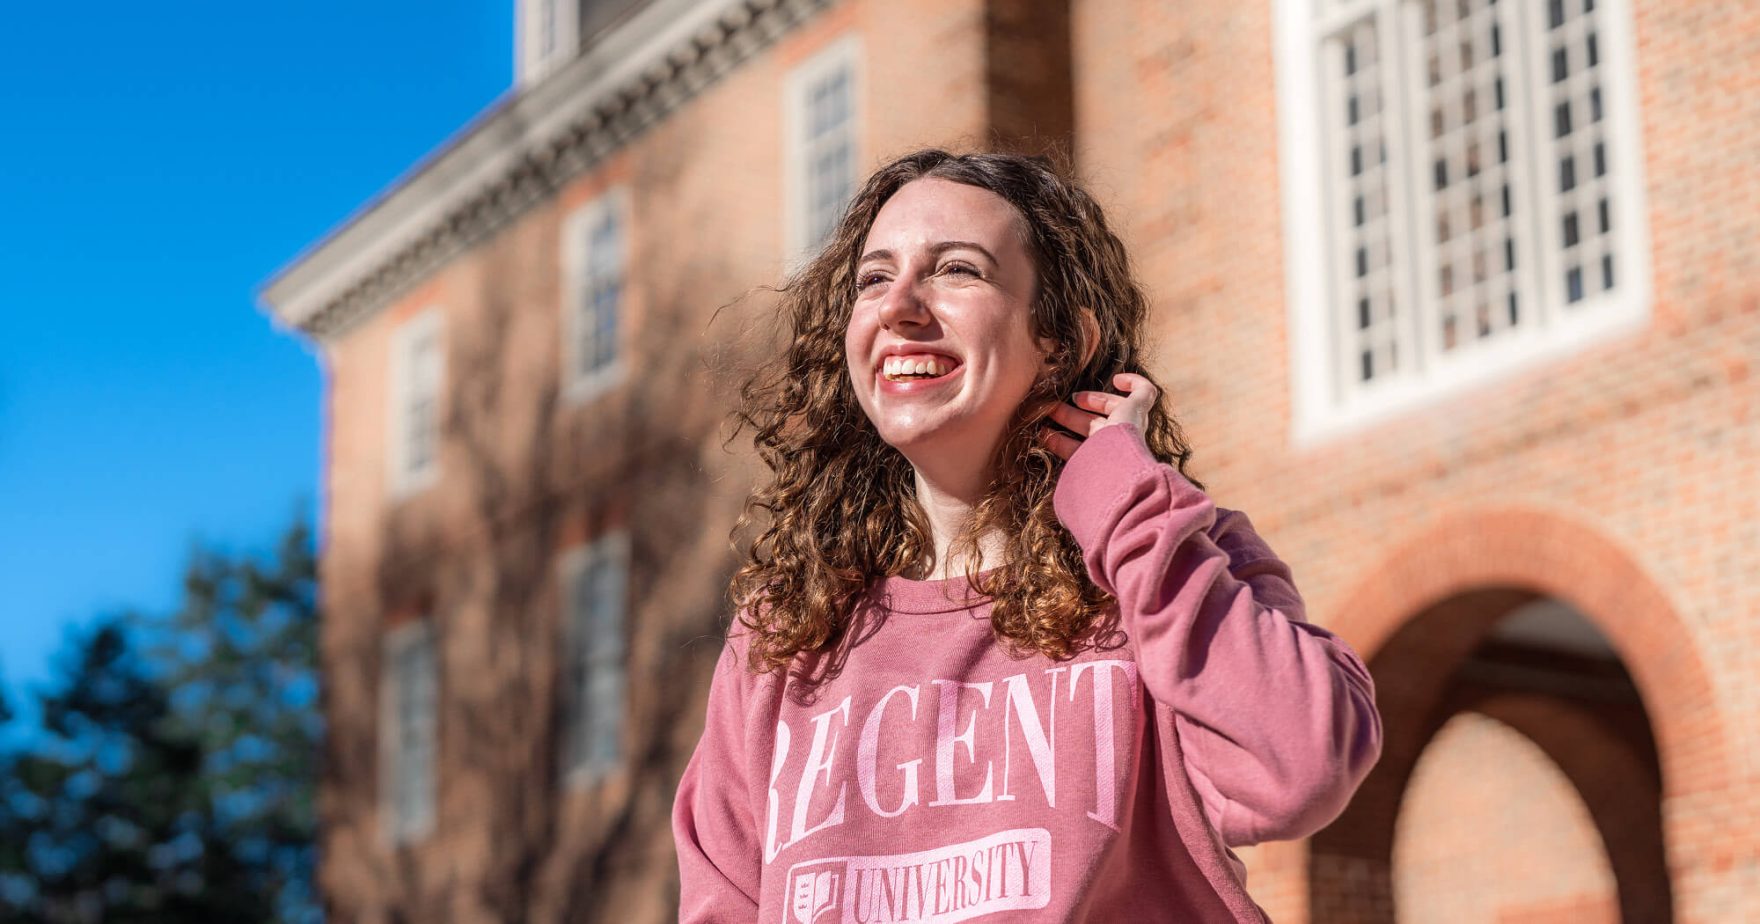 Student Smiling: Explore Regent University, a Christian University in Virginia.